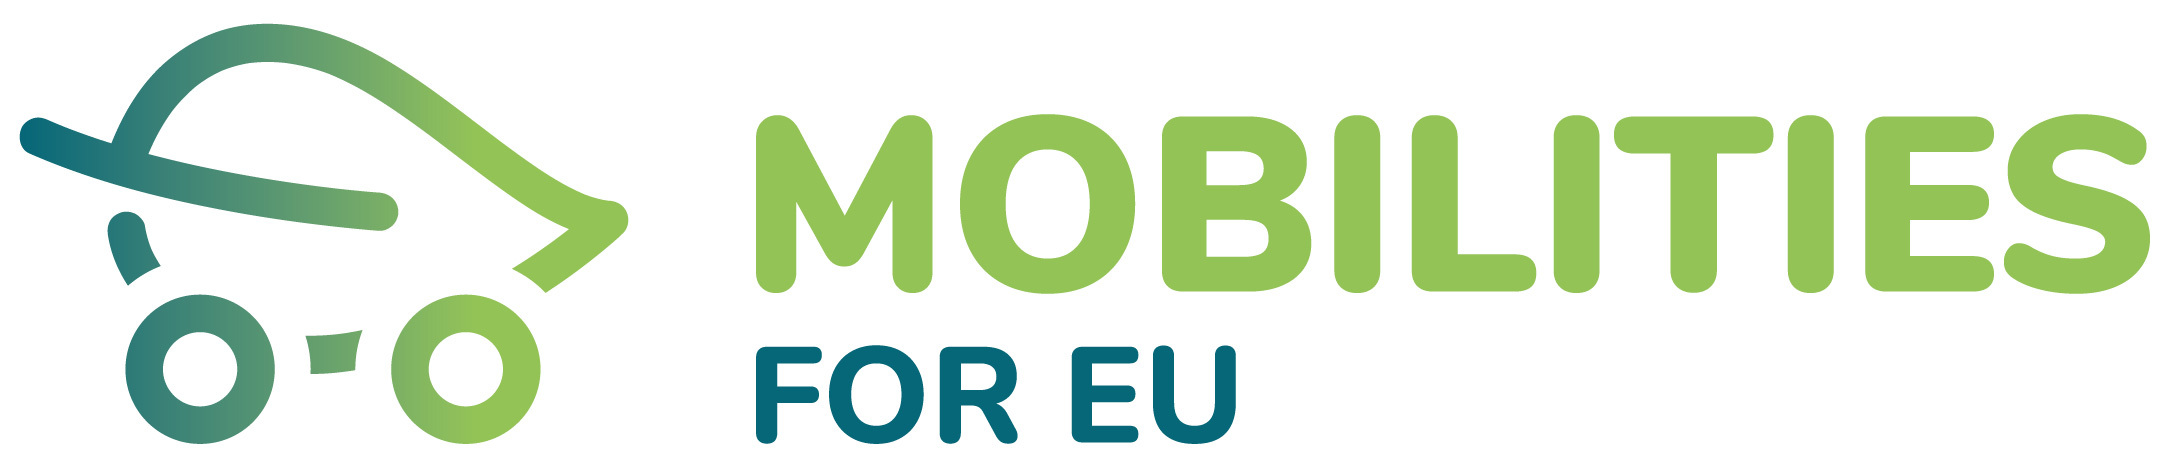 Mobilities logo